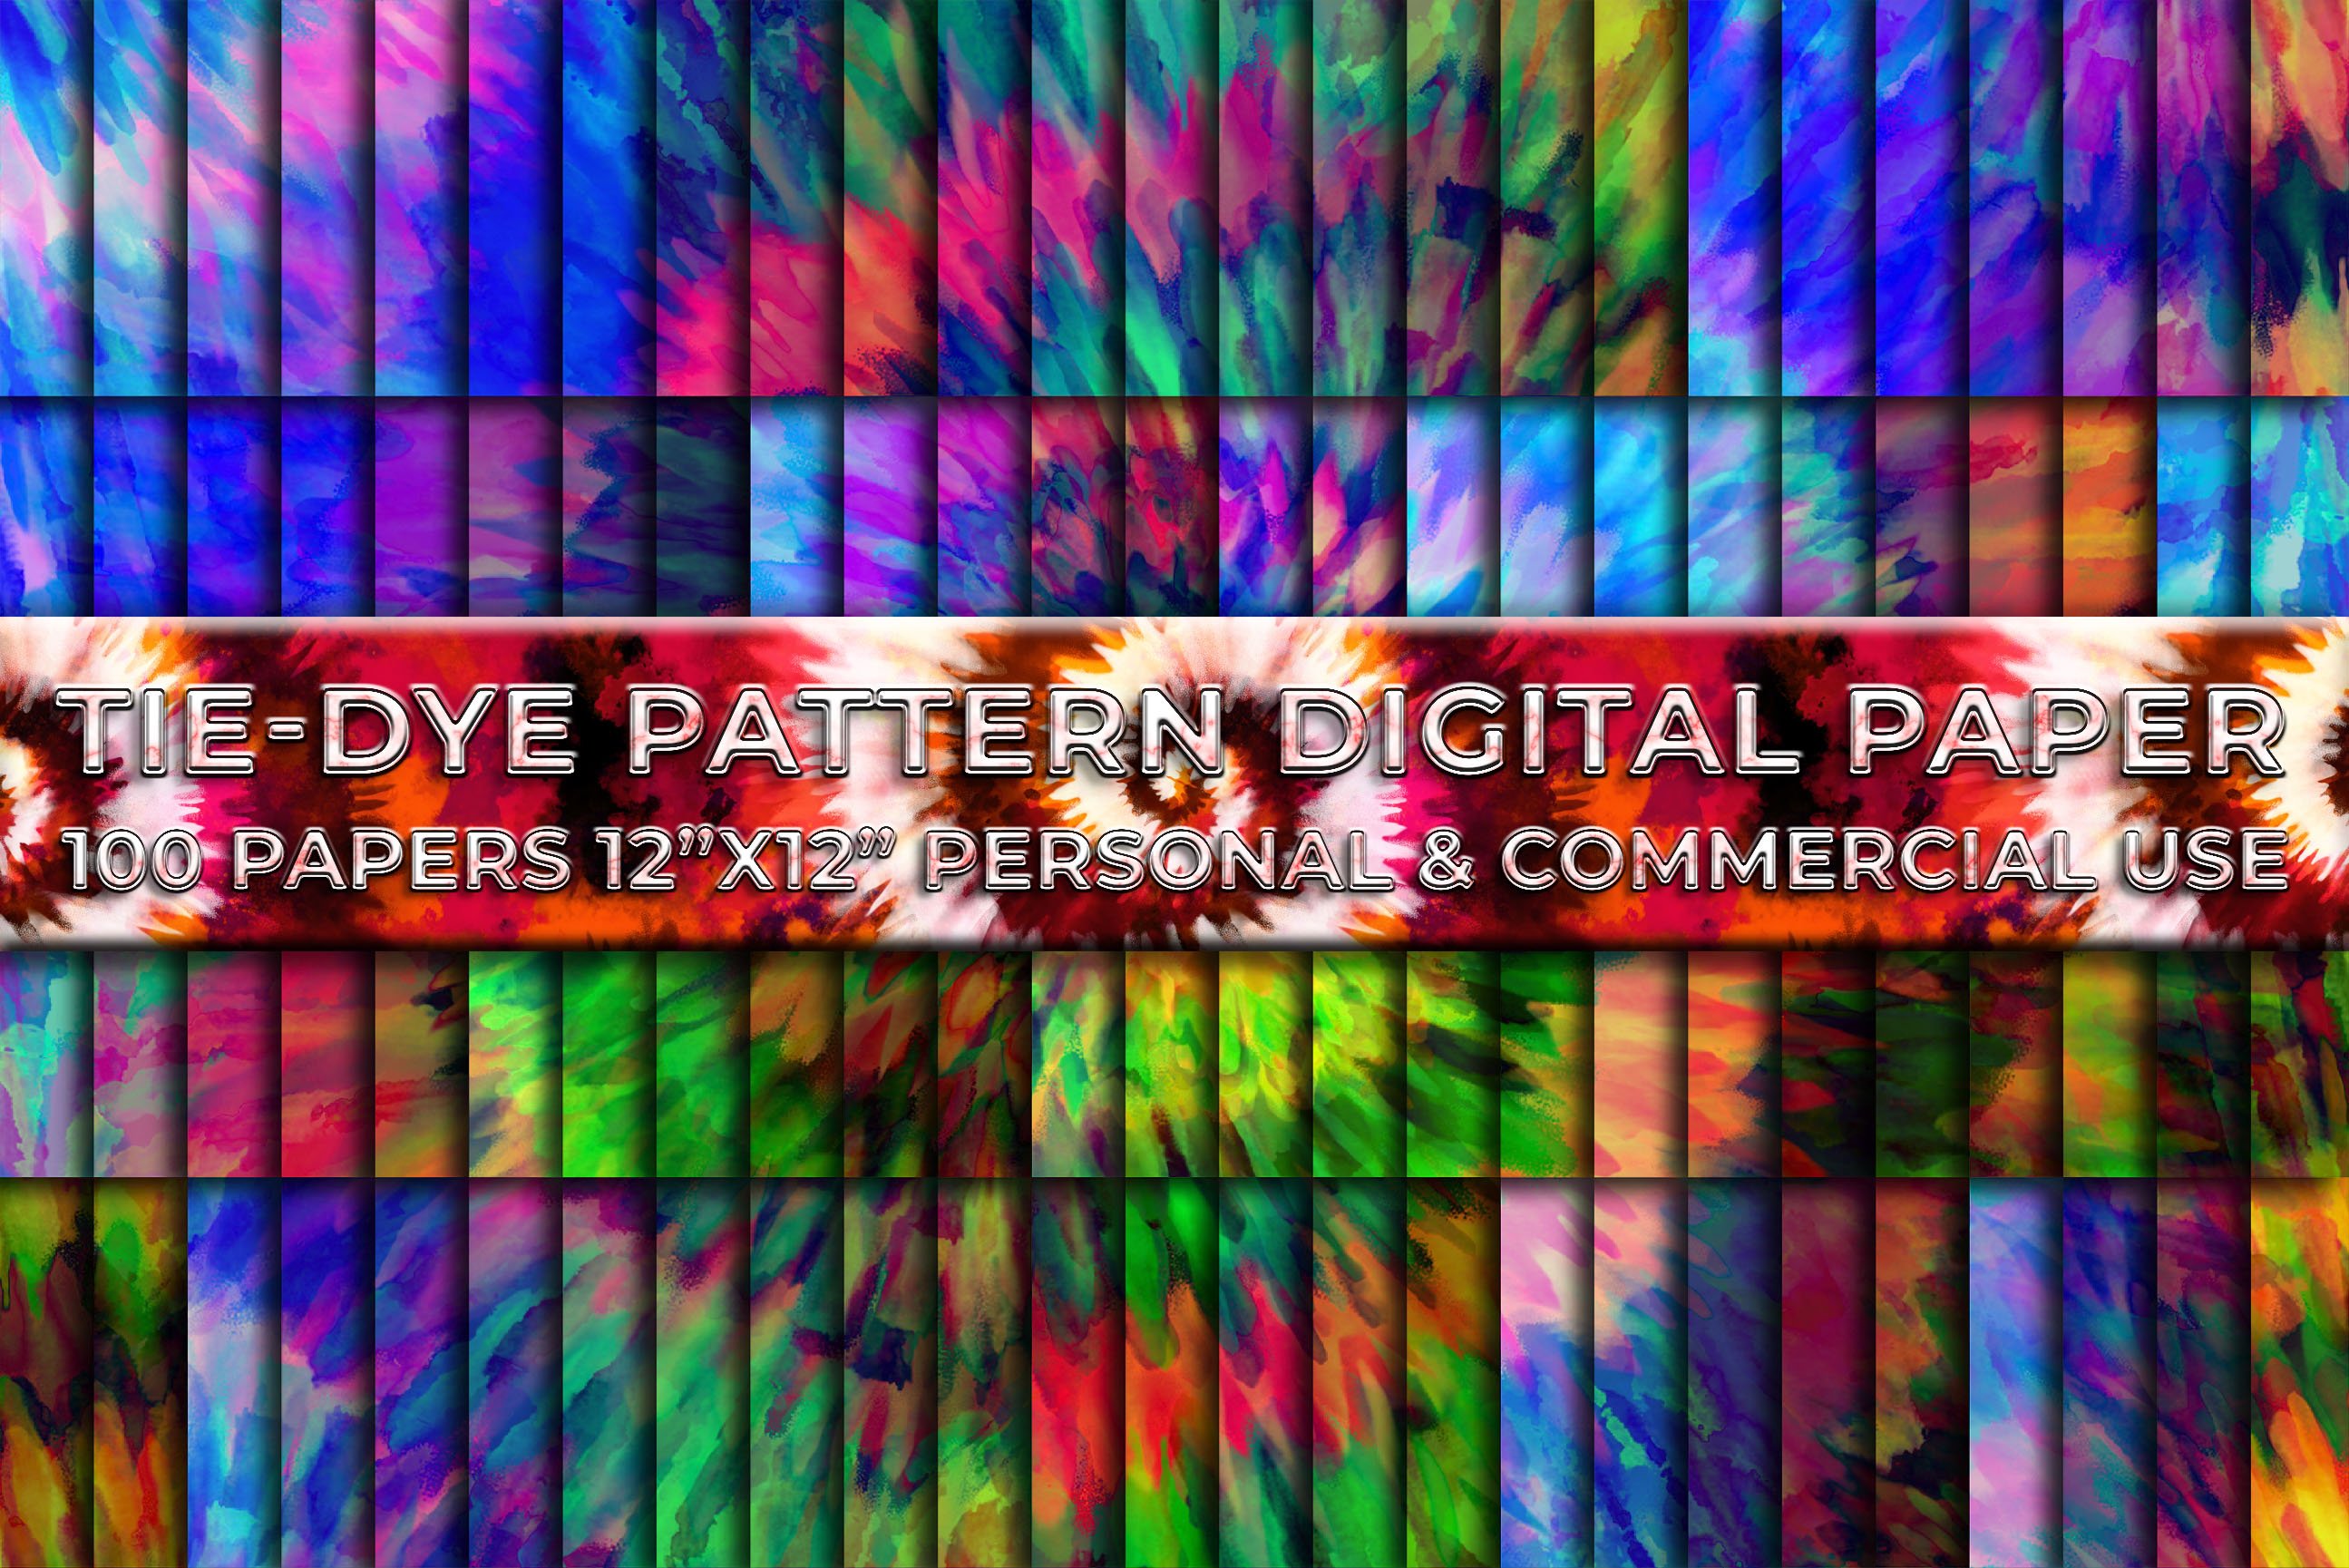 100 Tie Dye Pattern Digital Paper cover image.